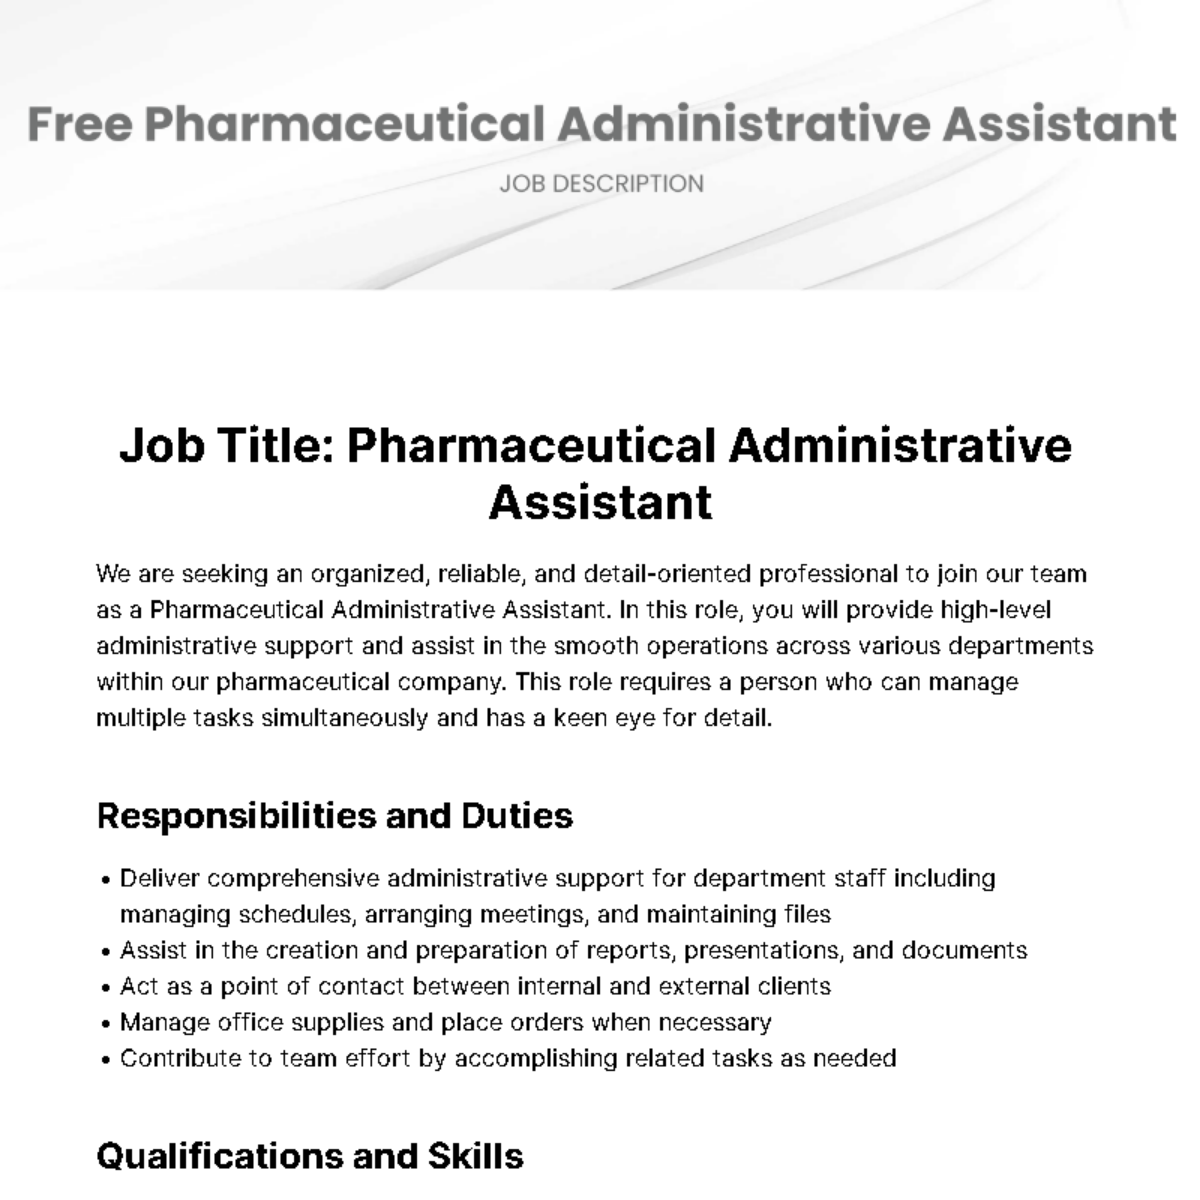 Free Pharmaceutical Administrative Assistant Job Description Template